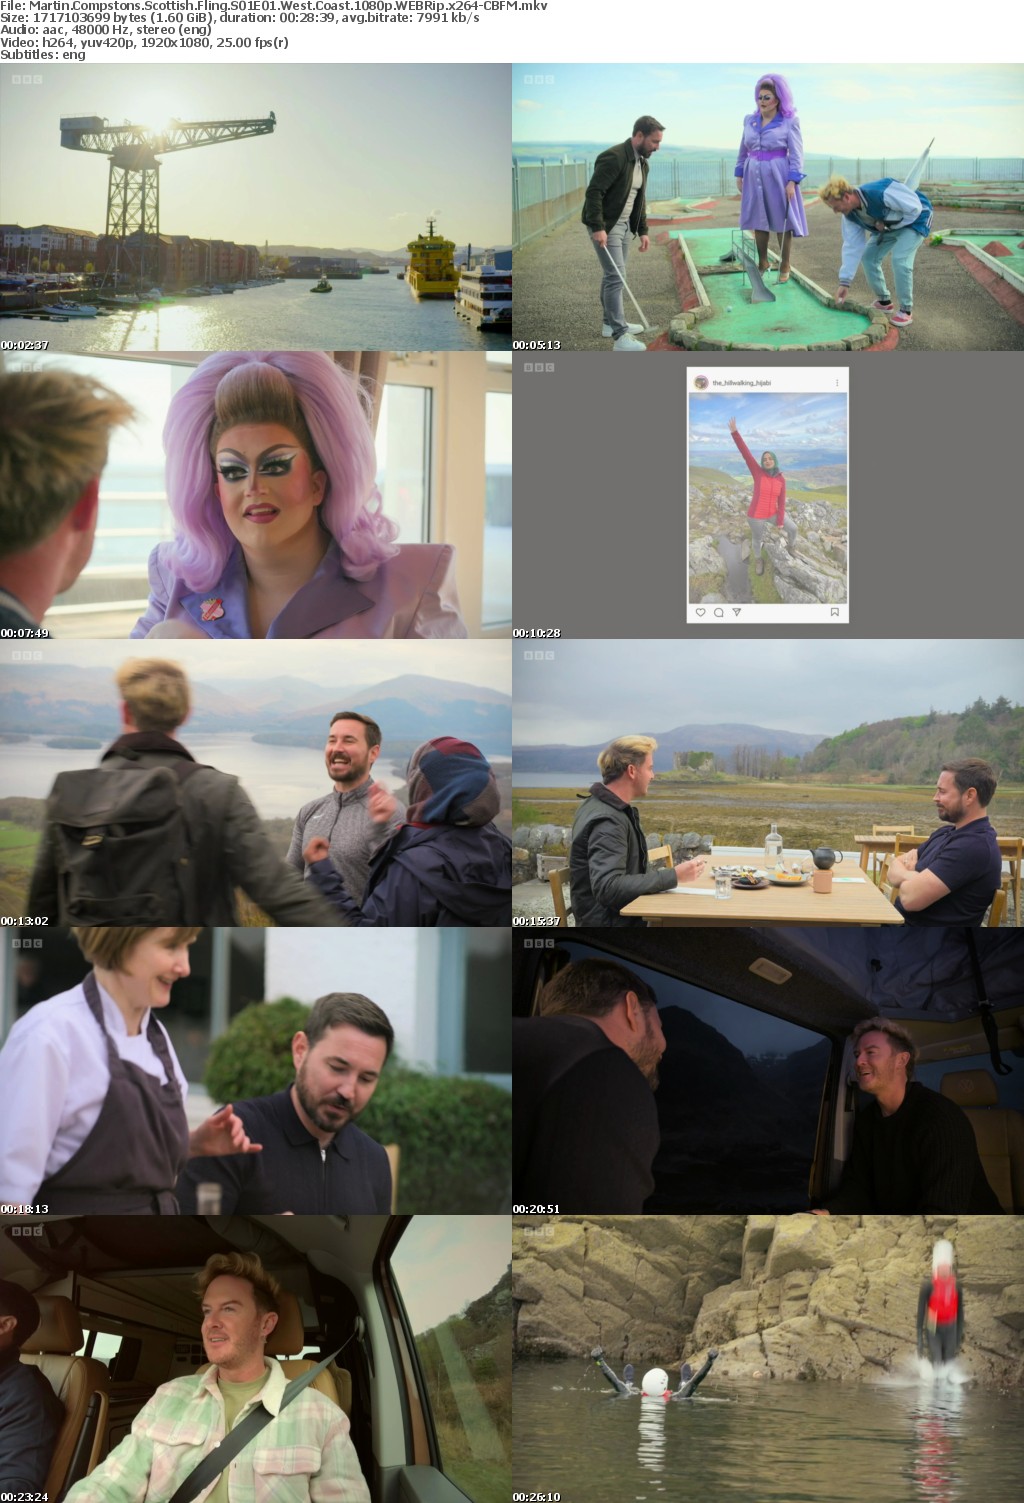 Martin Compstons Scottish Fling S01E01 West Coast 1080p WEBRip x264-CBFM